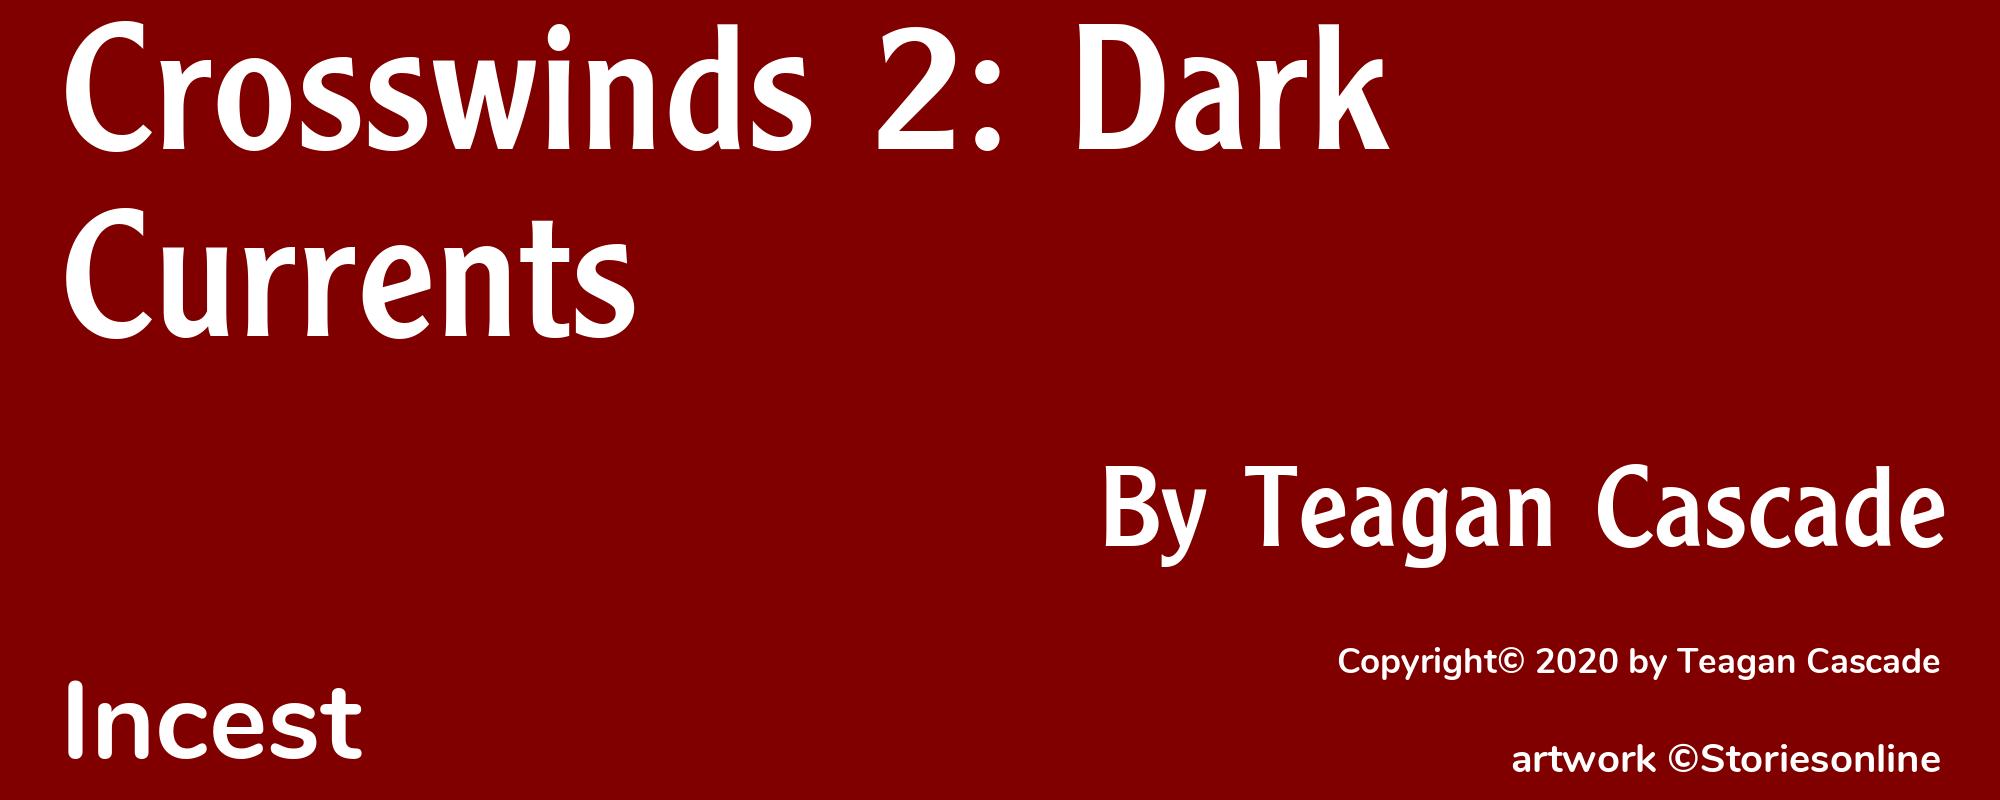 Crosswinds 2: Dark Currents - Cover